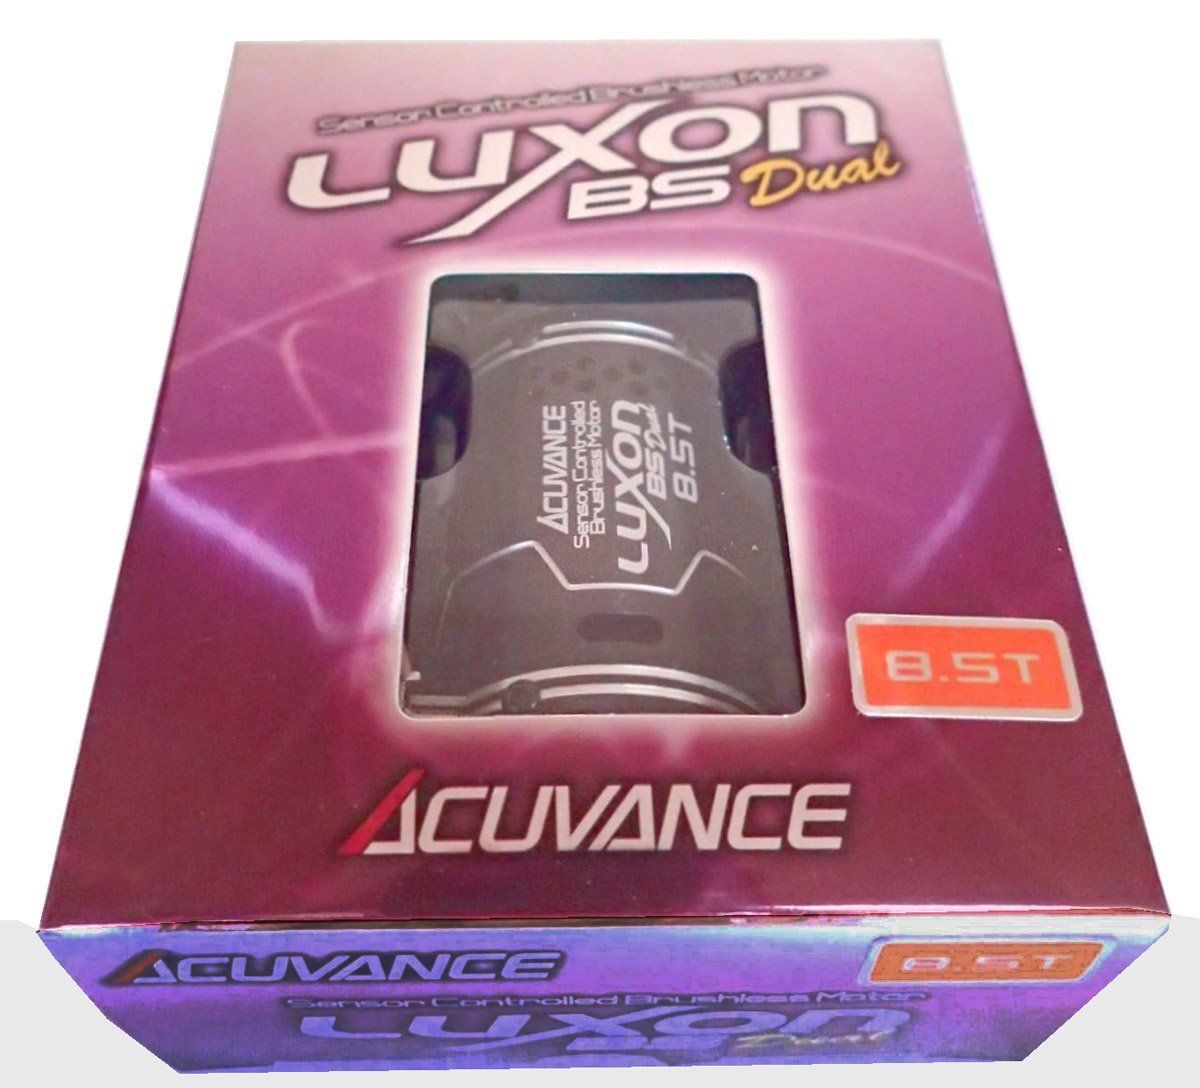 Acuvance (Keyence) Luxon BS Dual 8.5T with COA 5G (FREE!) - BanzaiHobby